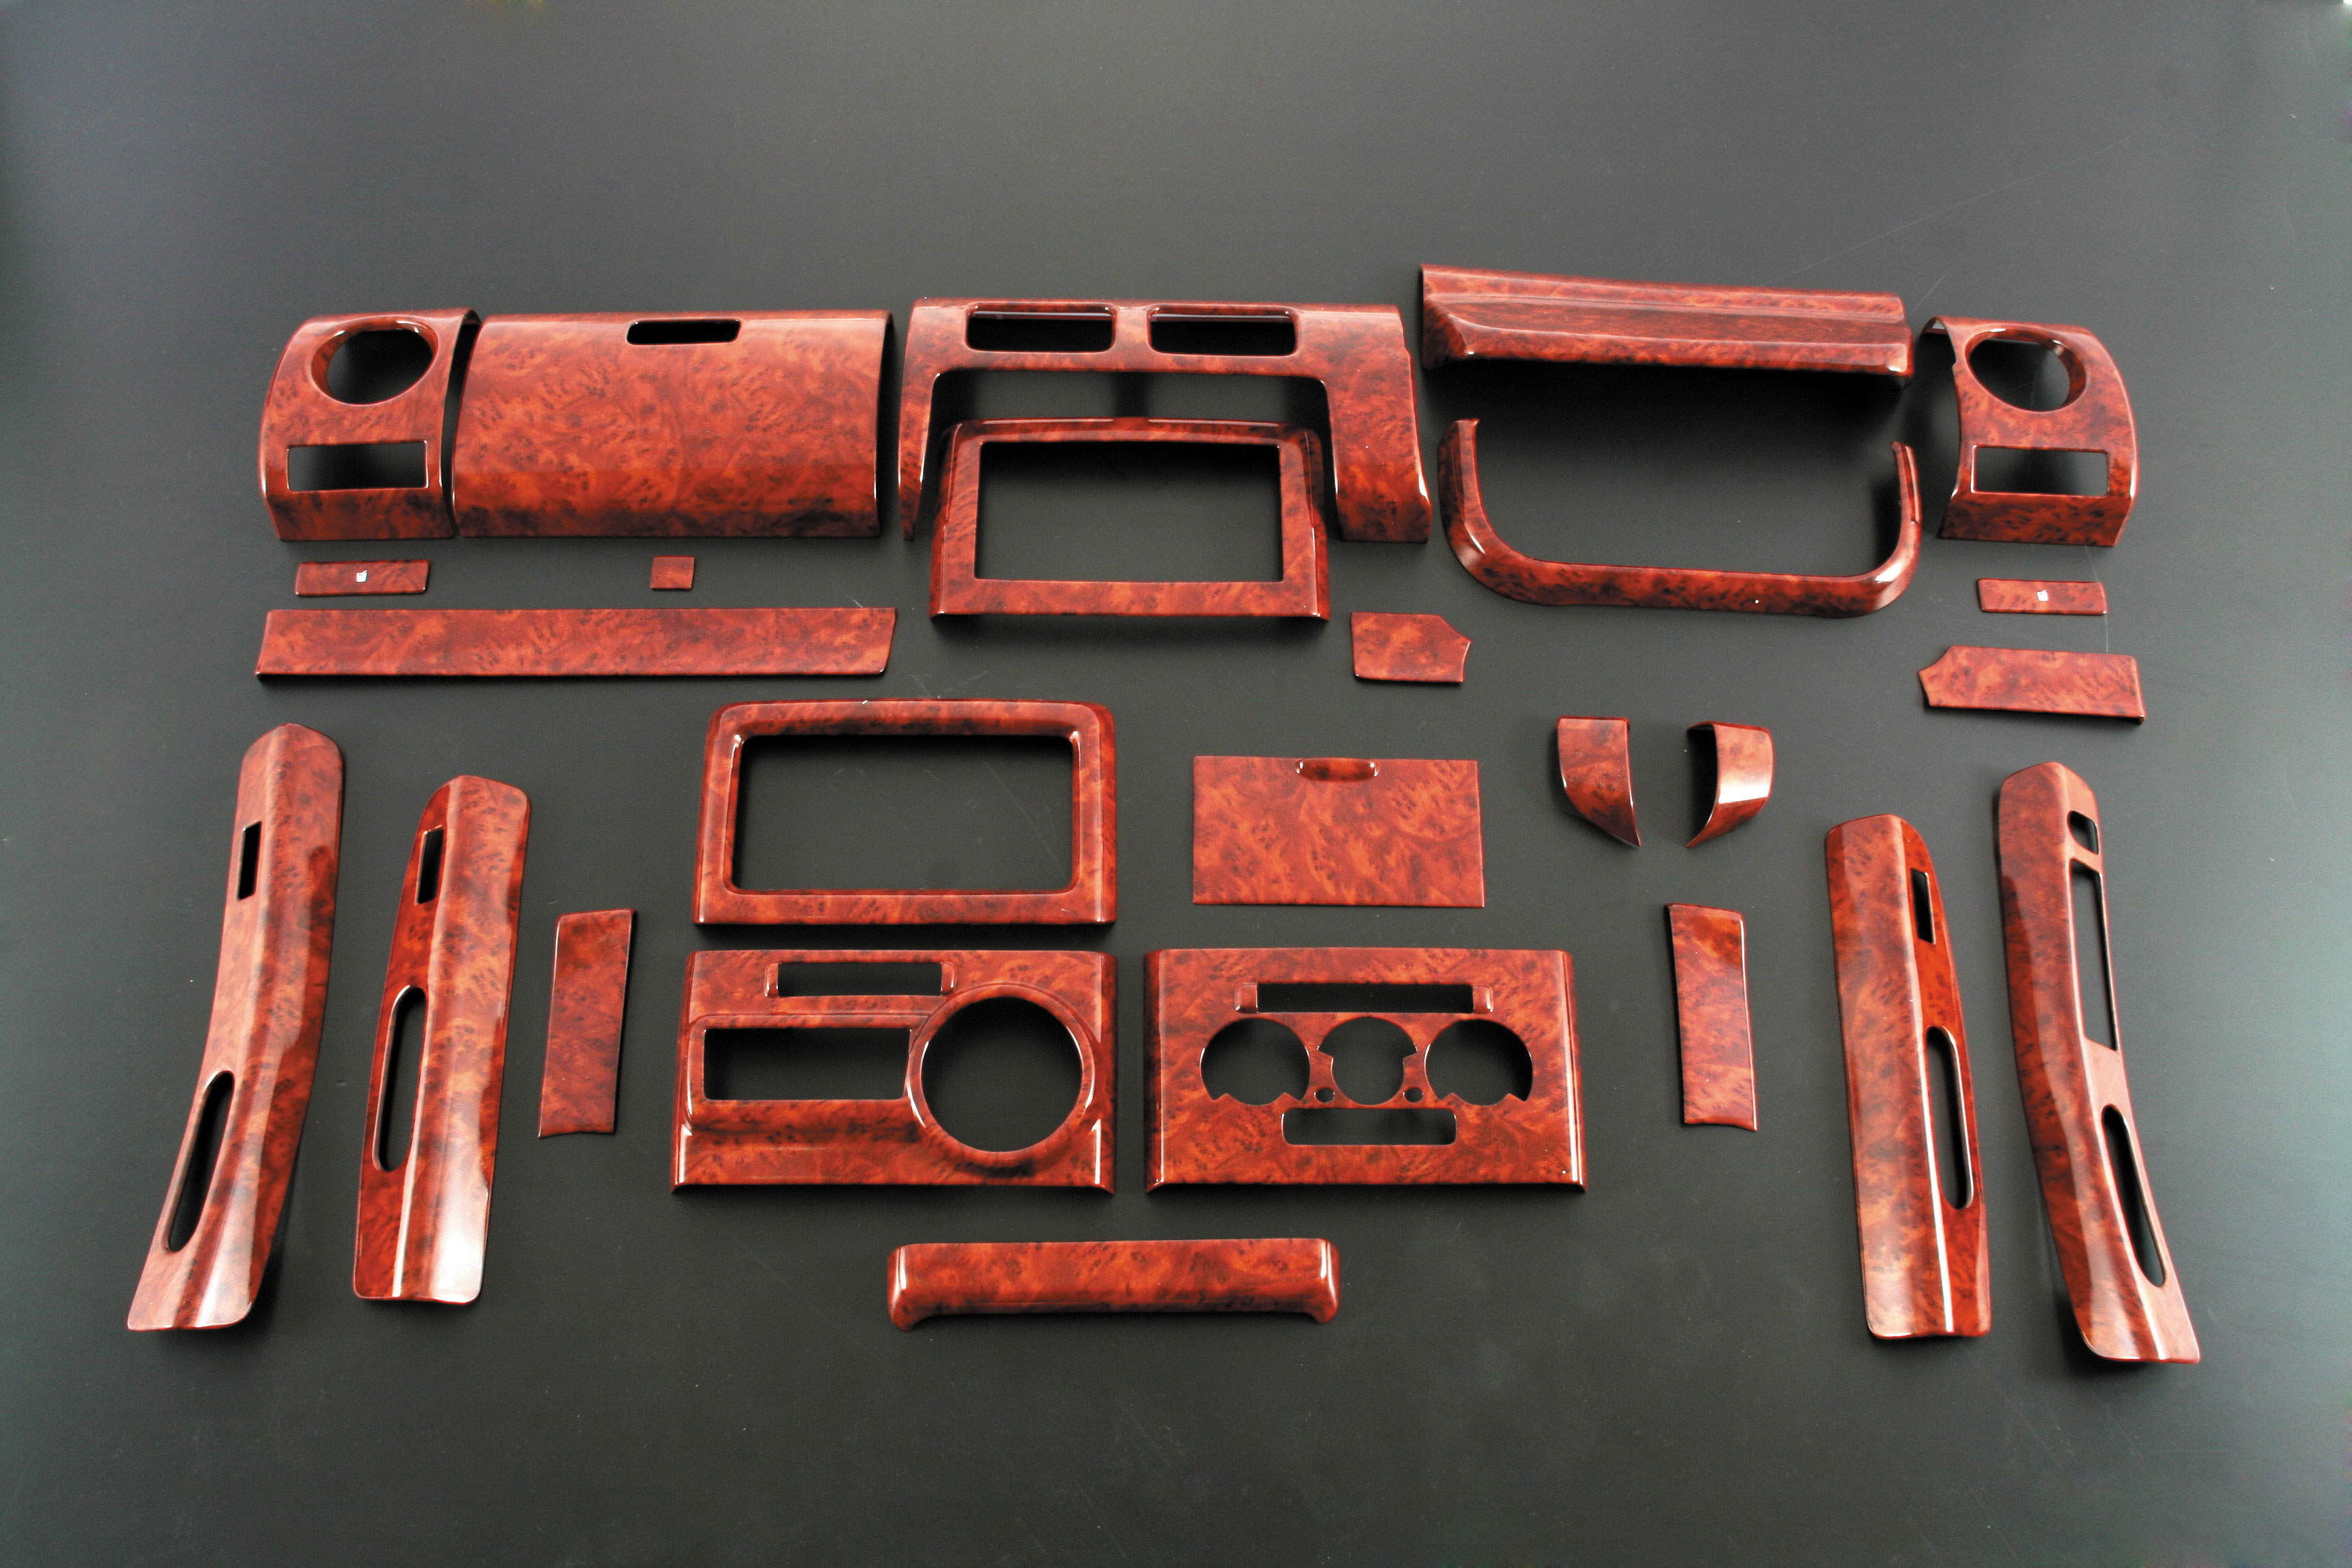 Zhaohui develops and makes high-quality 3D dashboard trim kits.